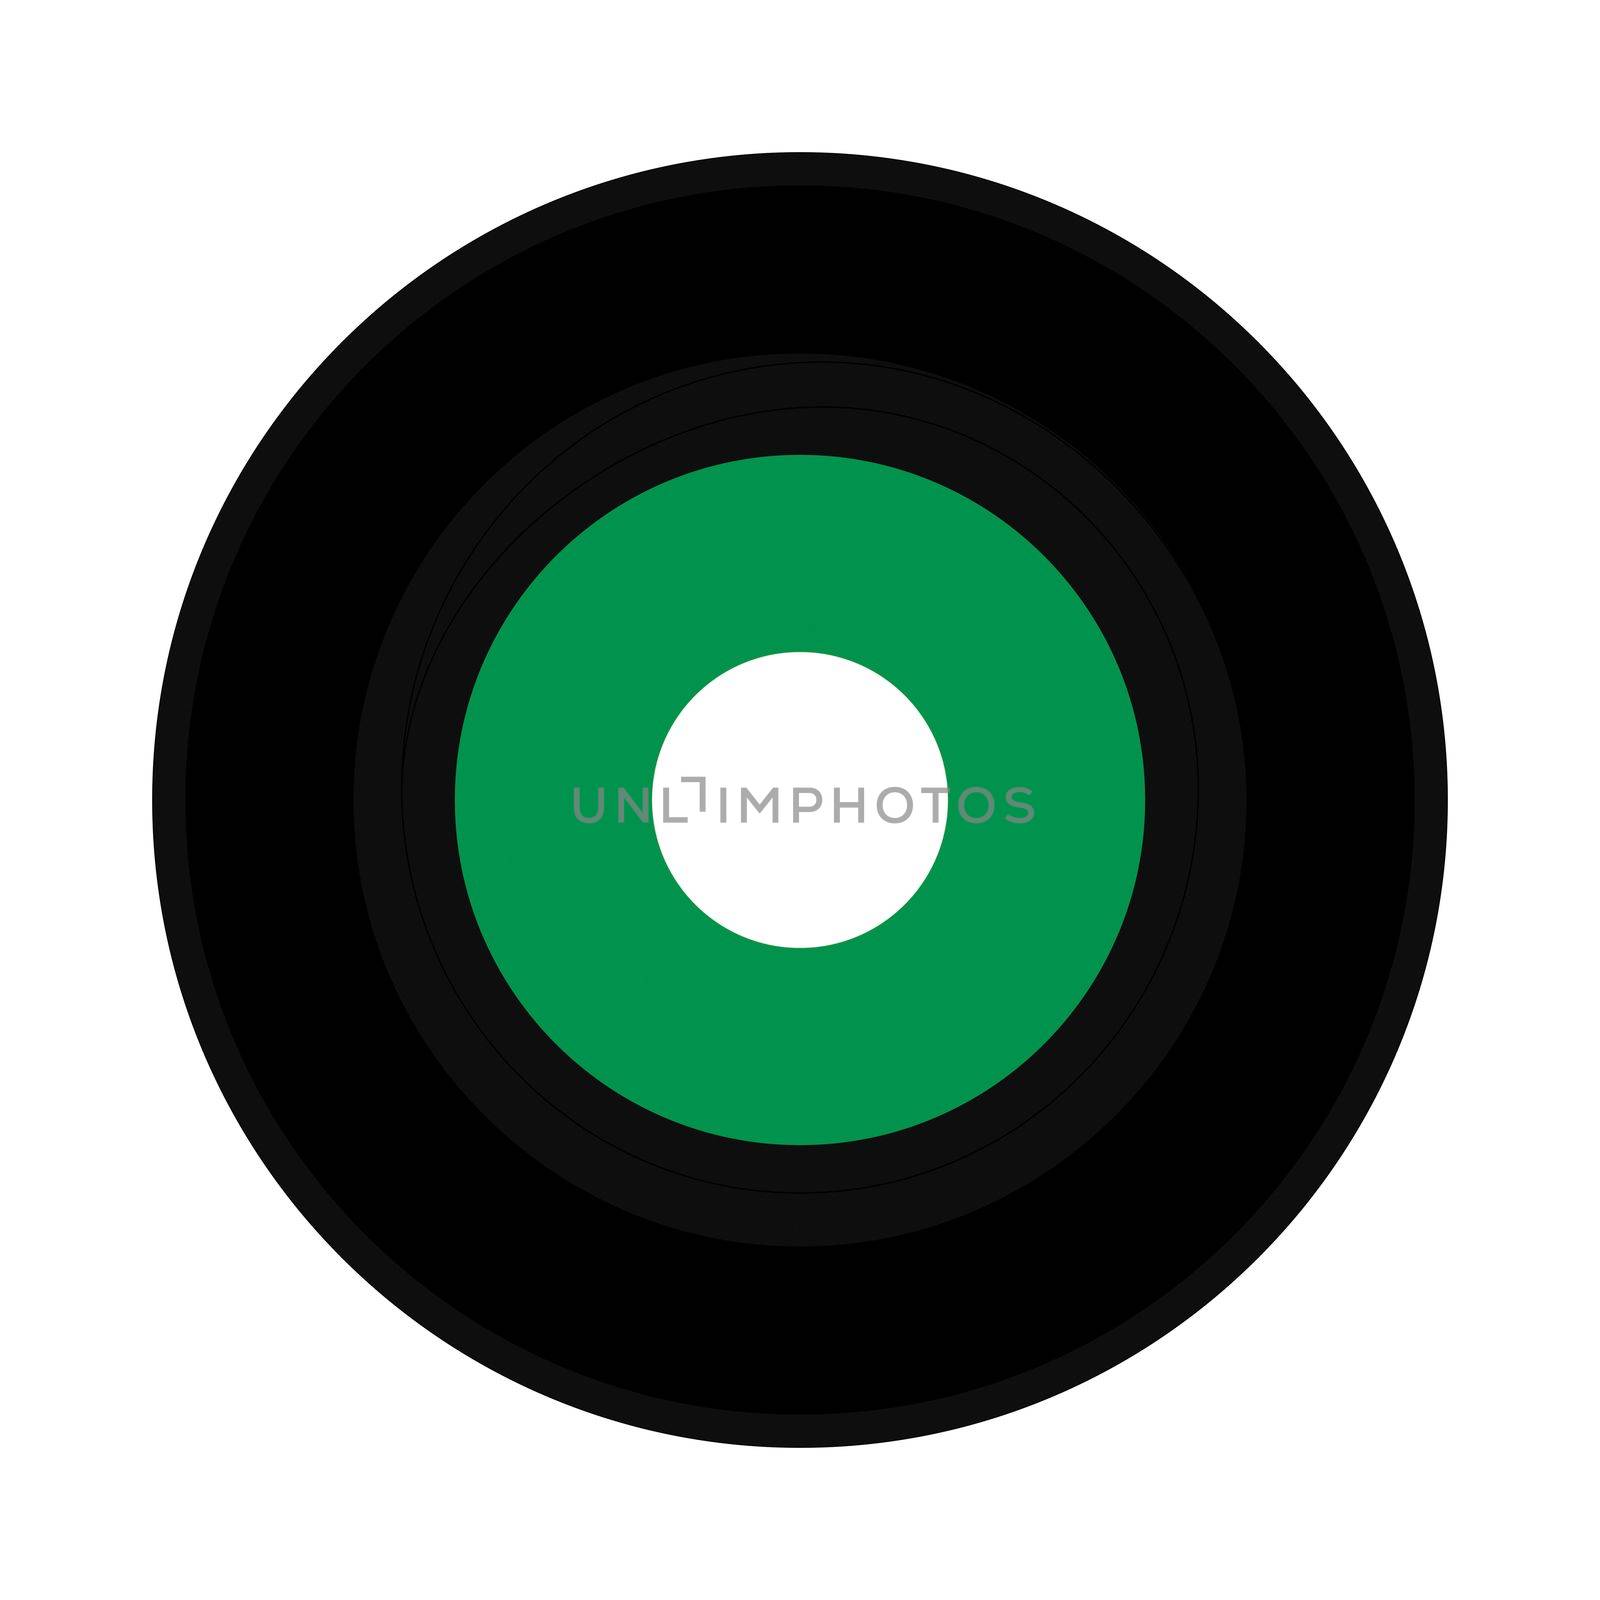 vinyl record green label by claudiodivizia